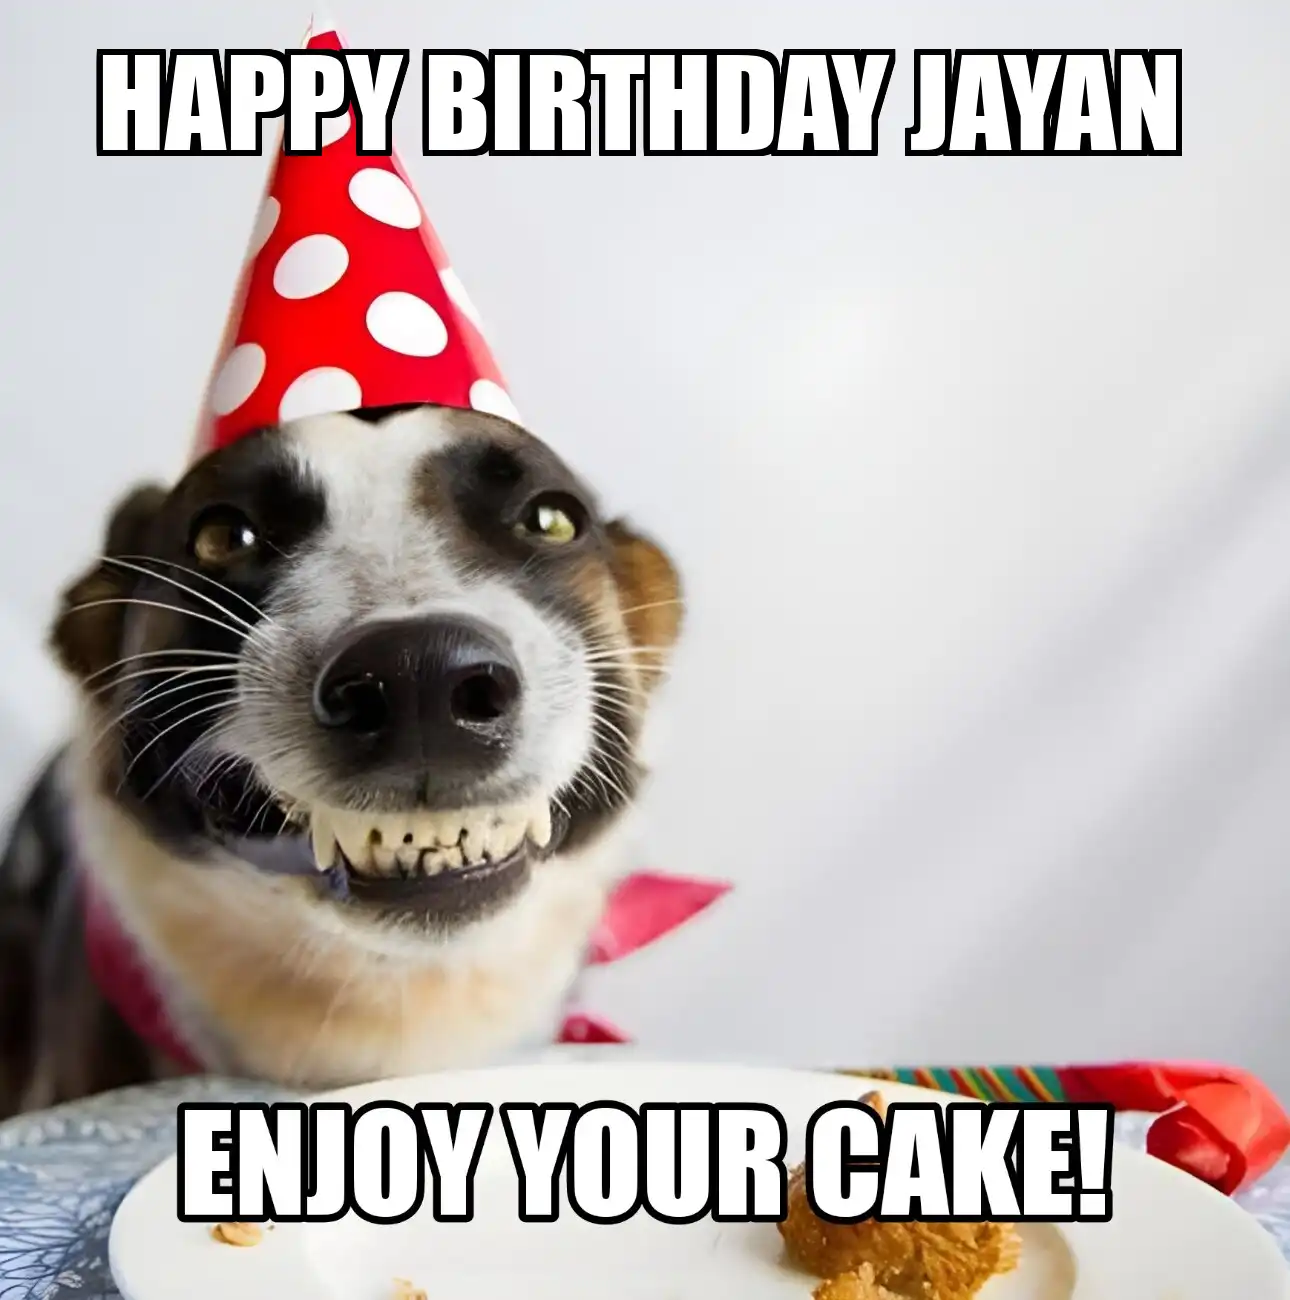 Happy Birthday Jayan Enjoy Your Cake Dog Meme